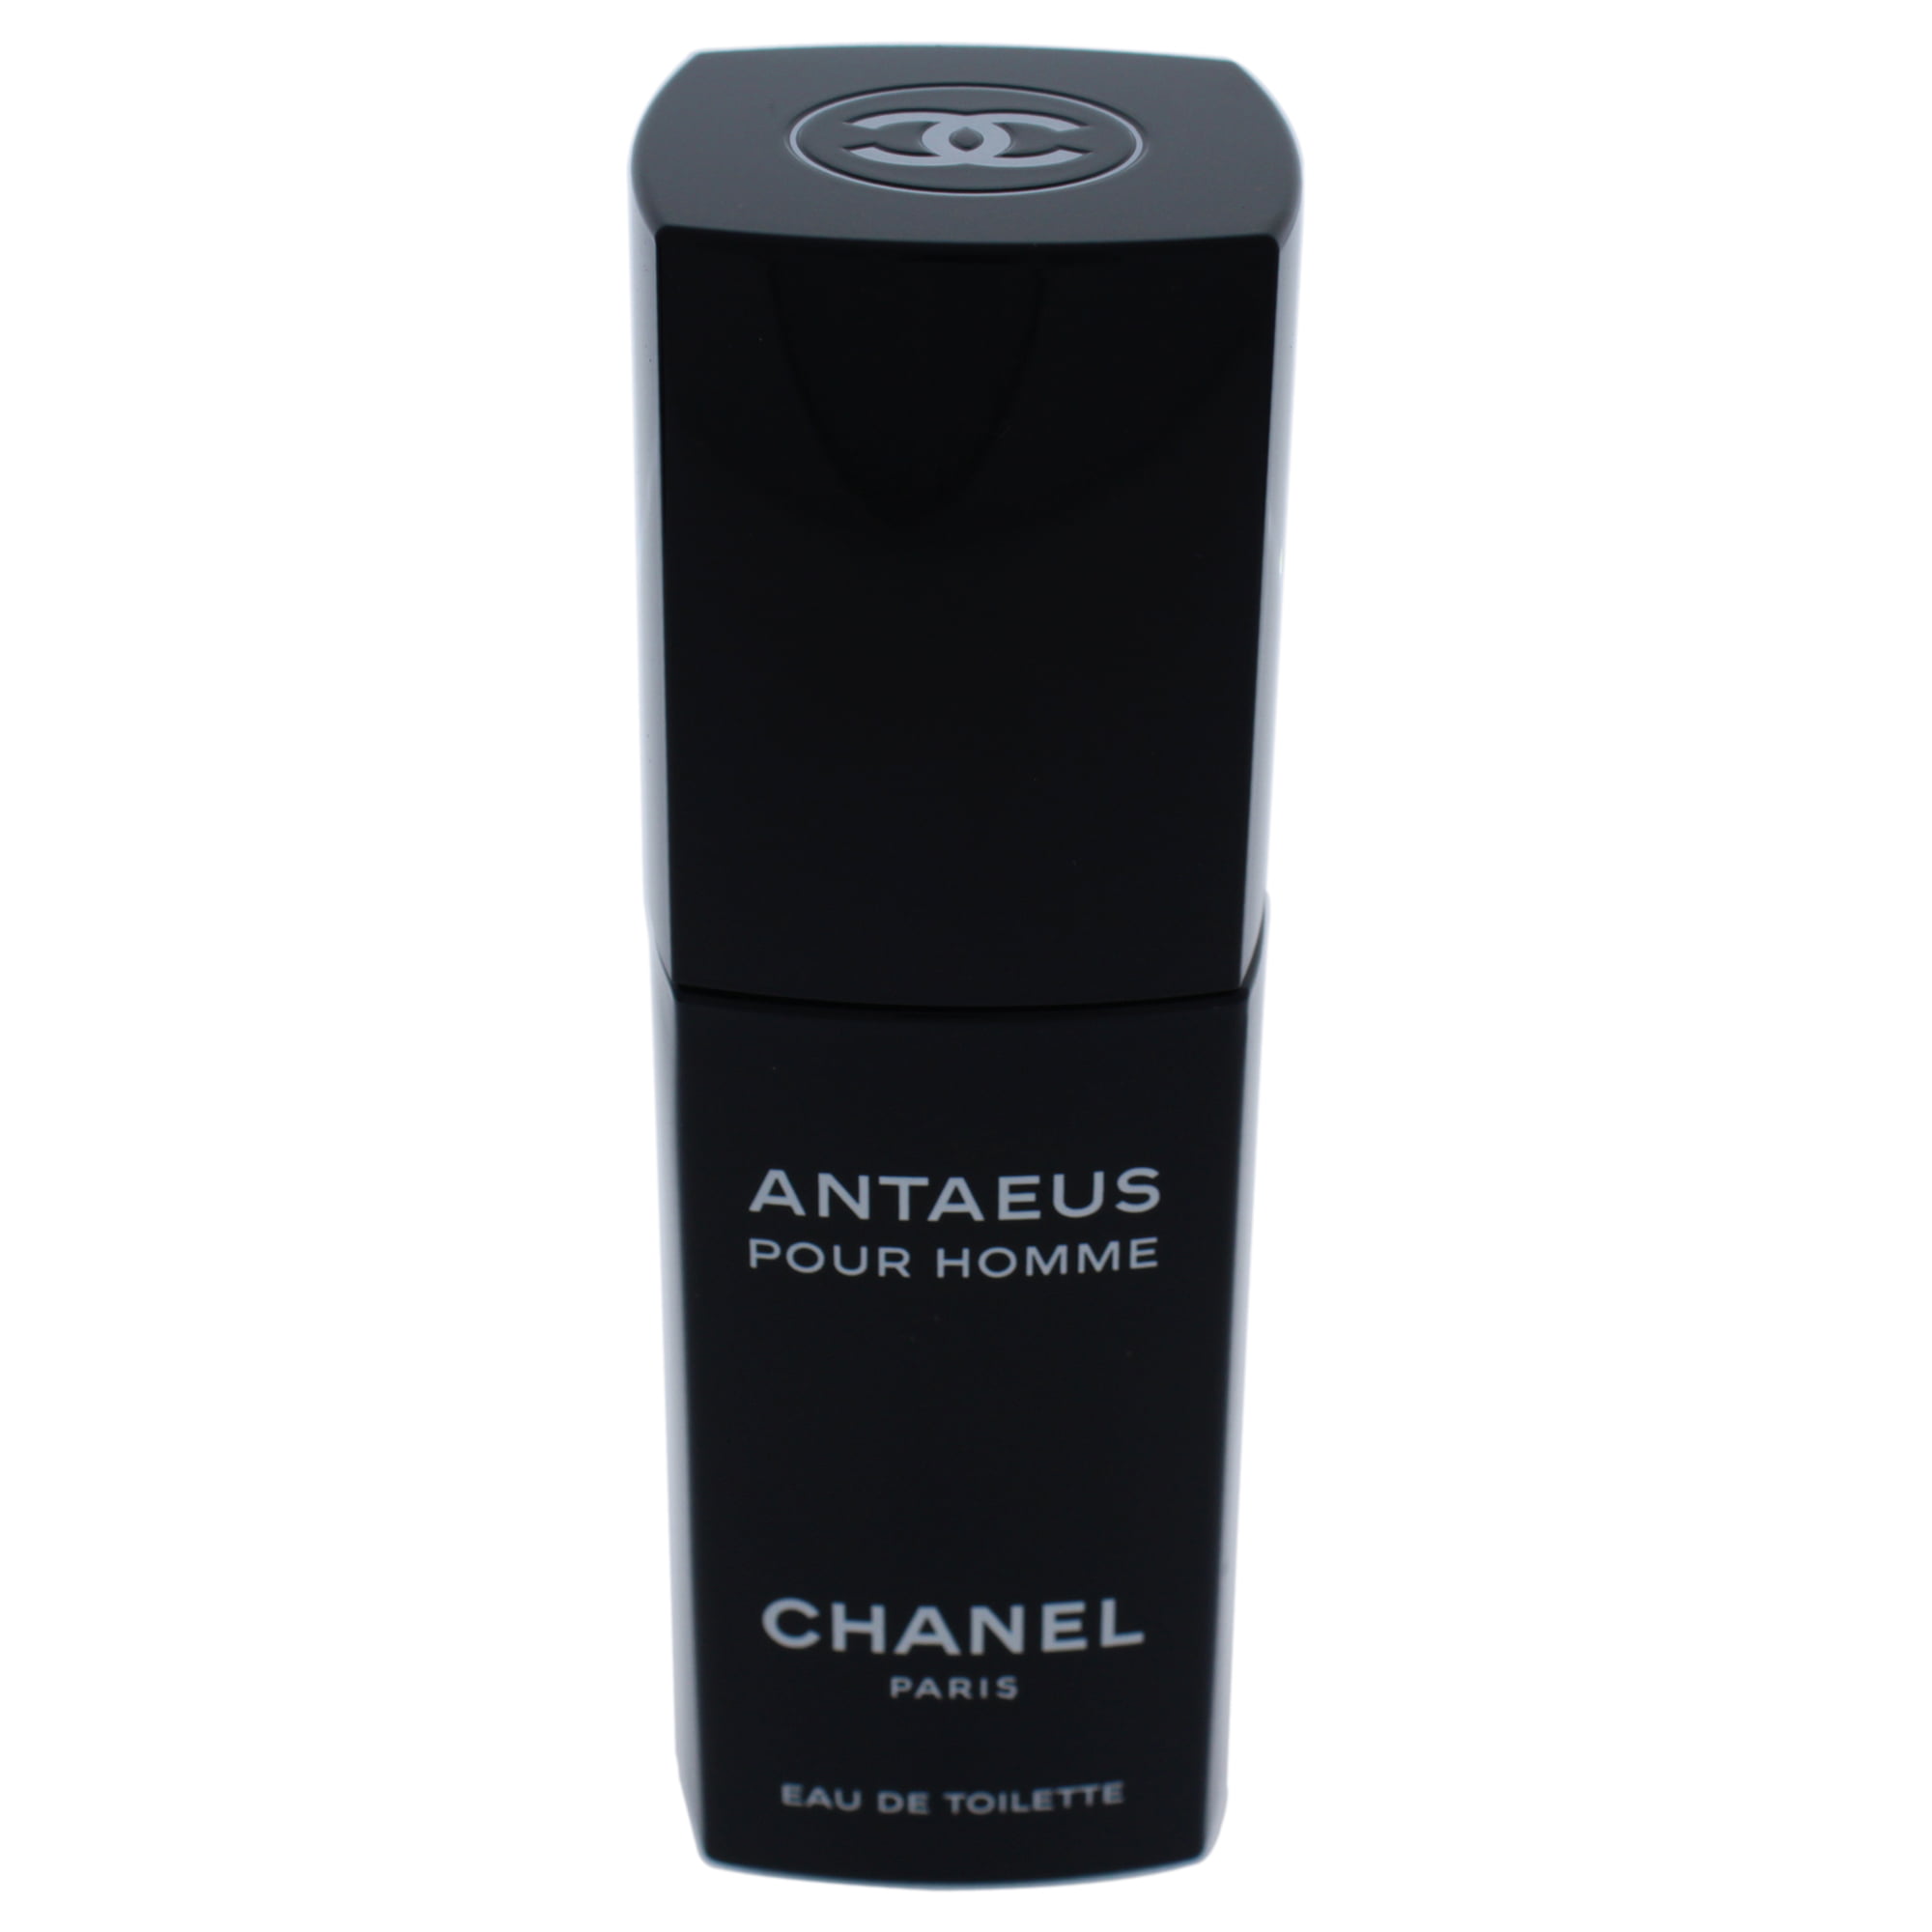 ANTAEUS by Chanel Eau De Toilette Spray 3.4 oz 